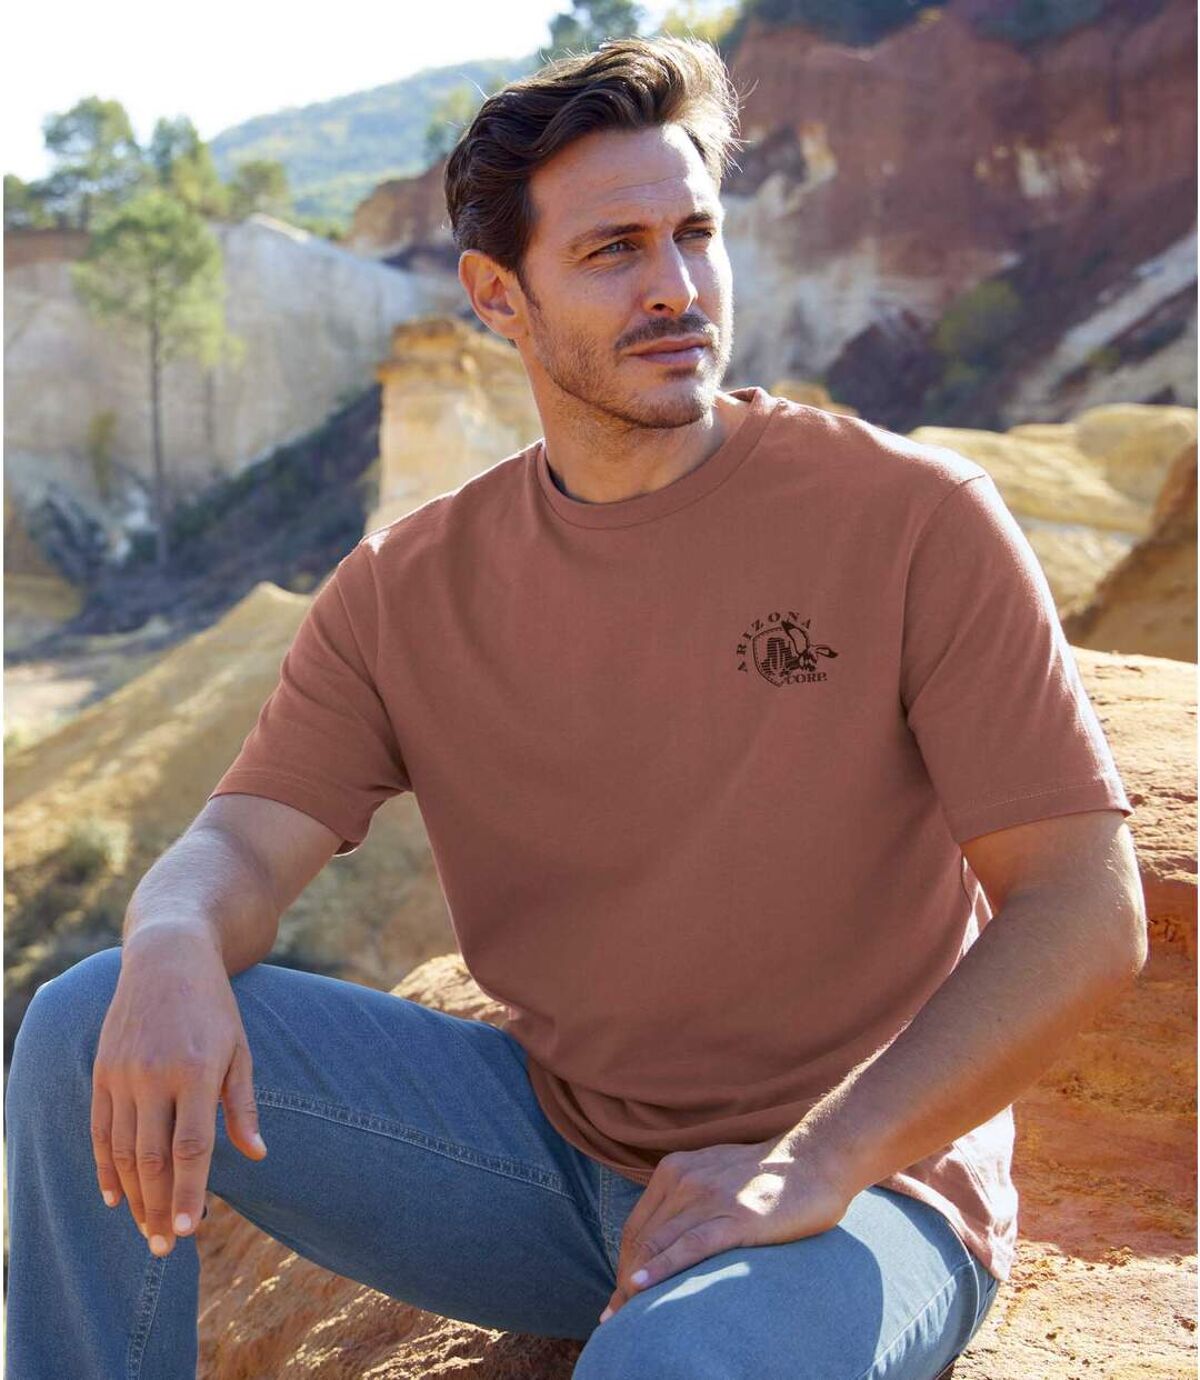 Zestaw 4 t-shirtów Essential Outdoor Atlas For Men